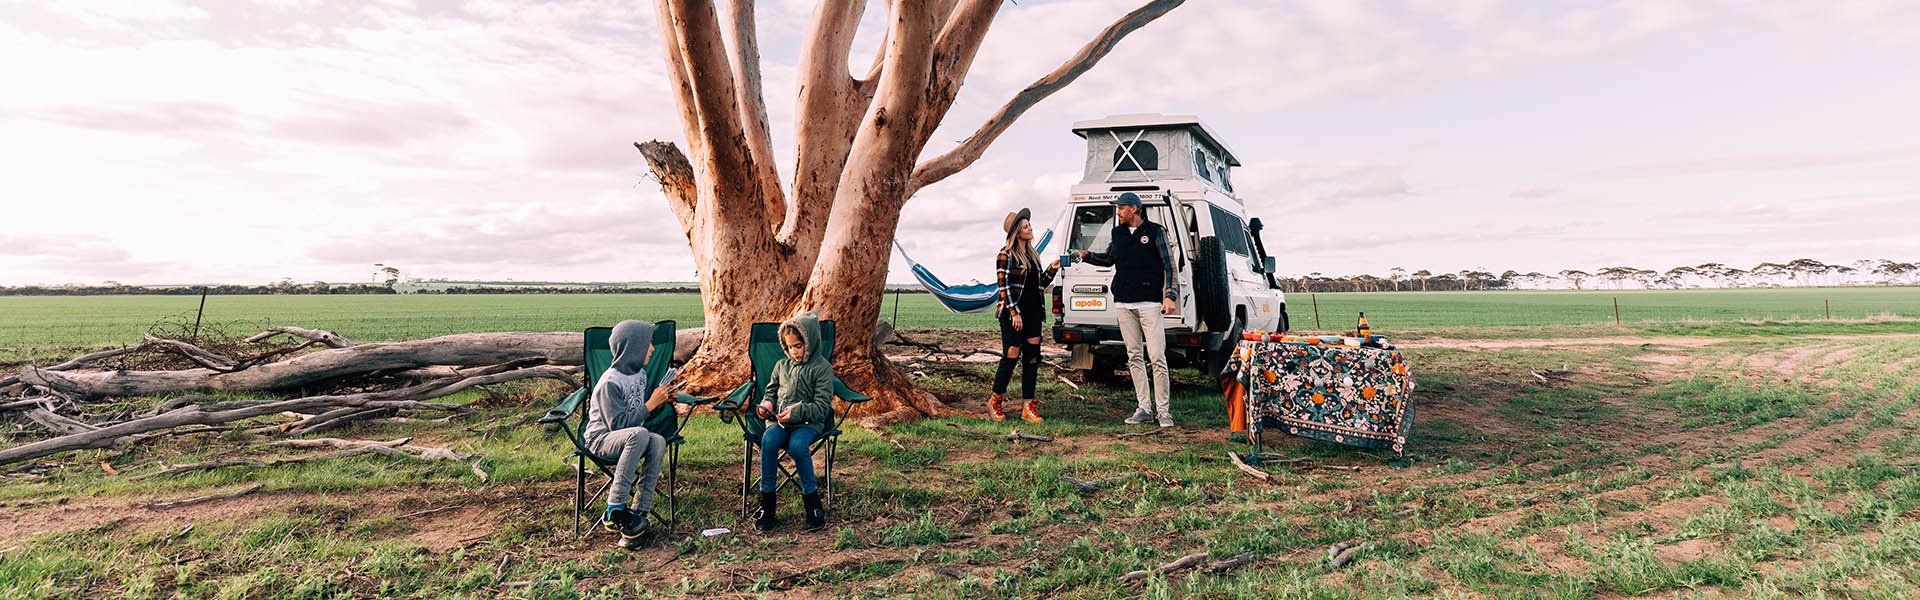 Family enjoying campervan holiday in Australia